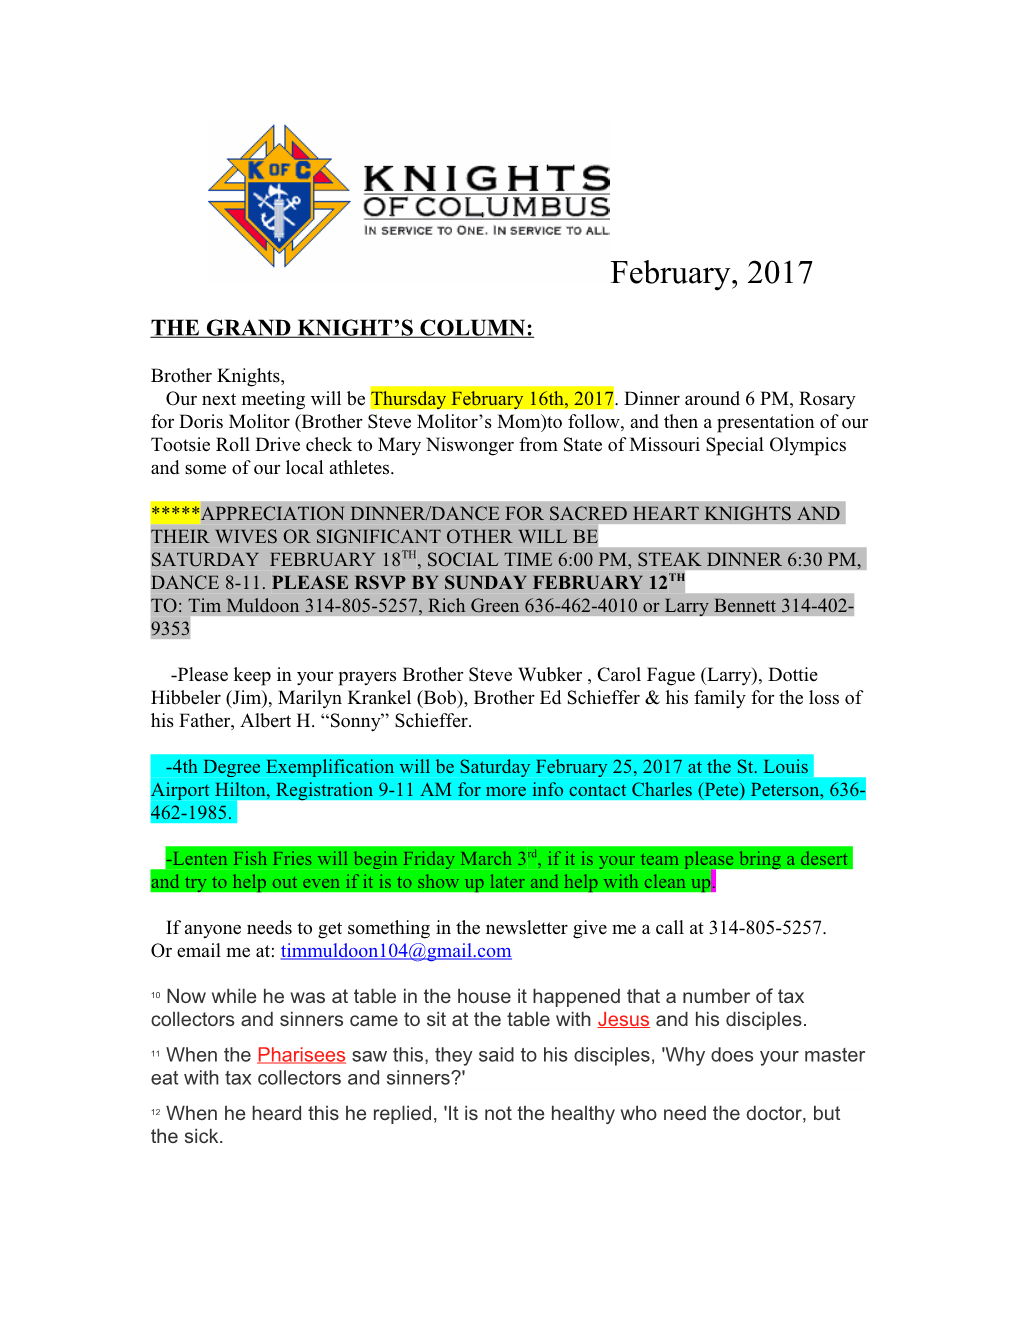 The Grand Knight S Column